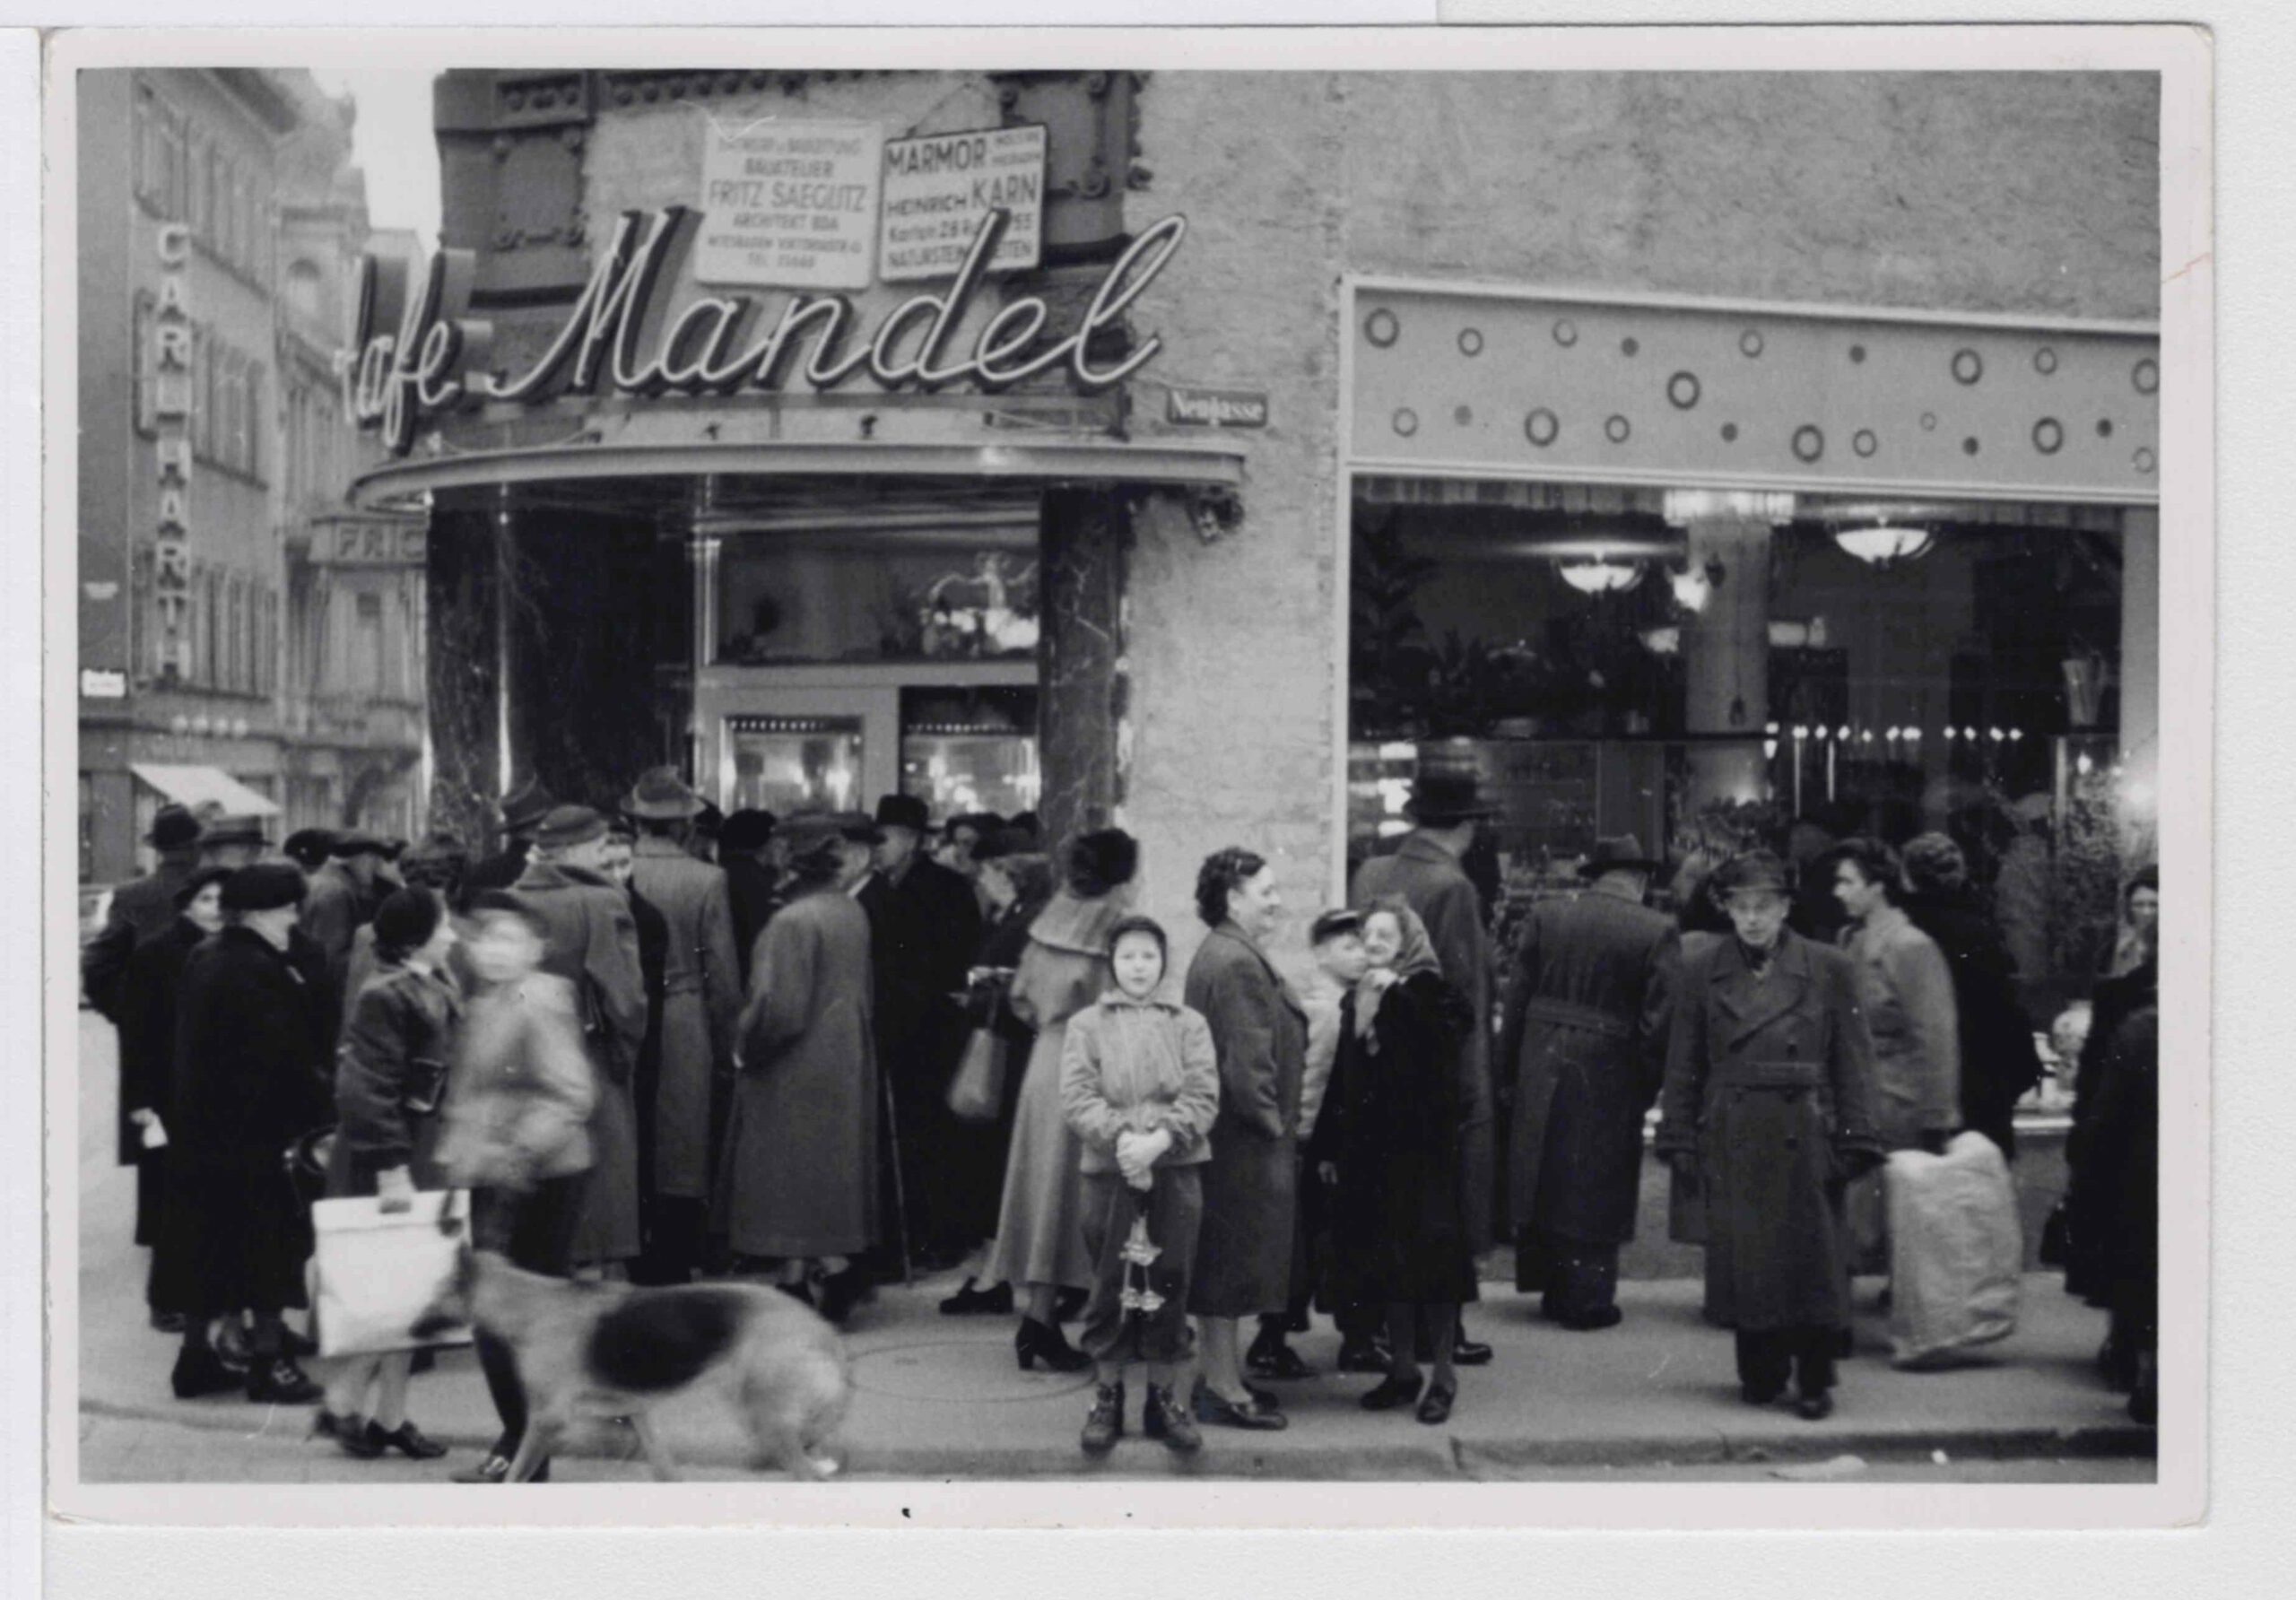 The Café Mandel in Neugasse - opened in 1954. Collection Samuel Mandelbaum